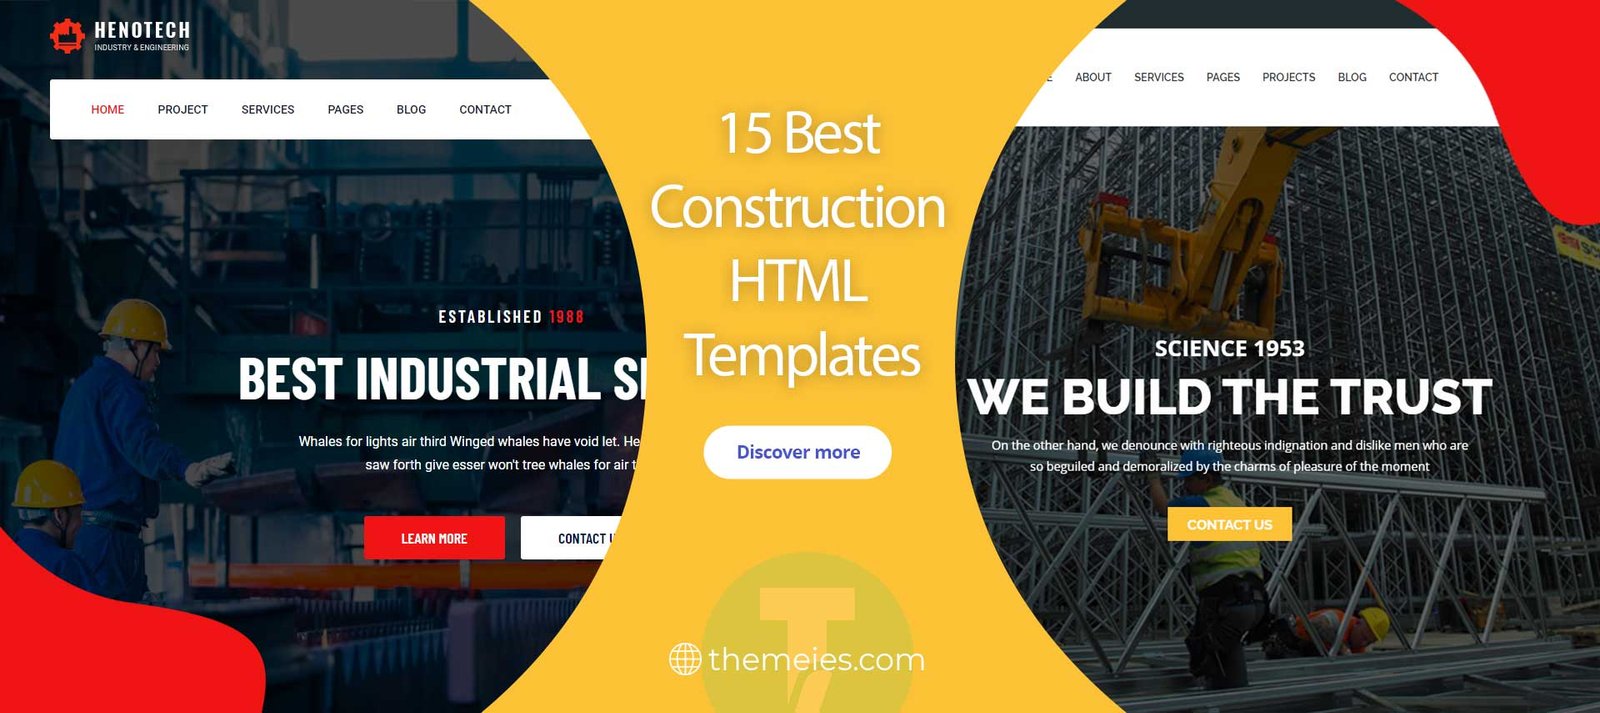 15 Best Construction HTML Templates